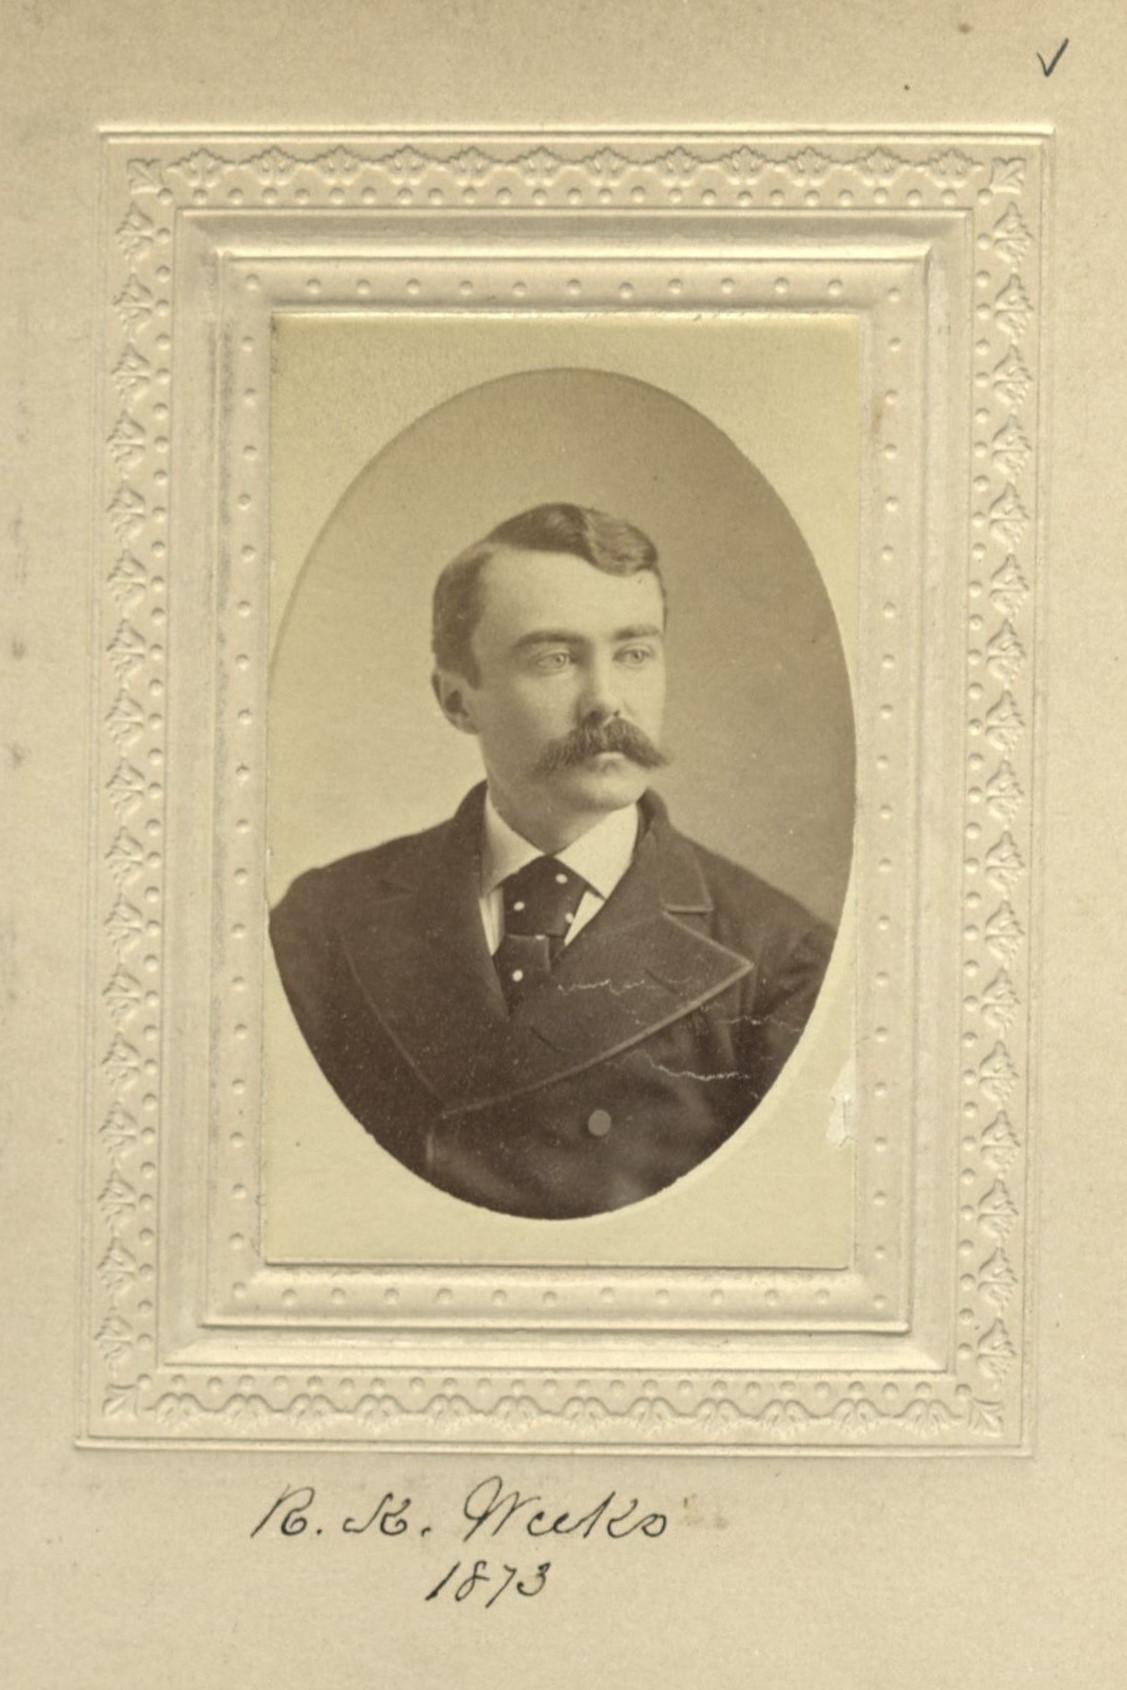 Member portrait of Robert K. Weeks